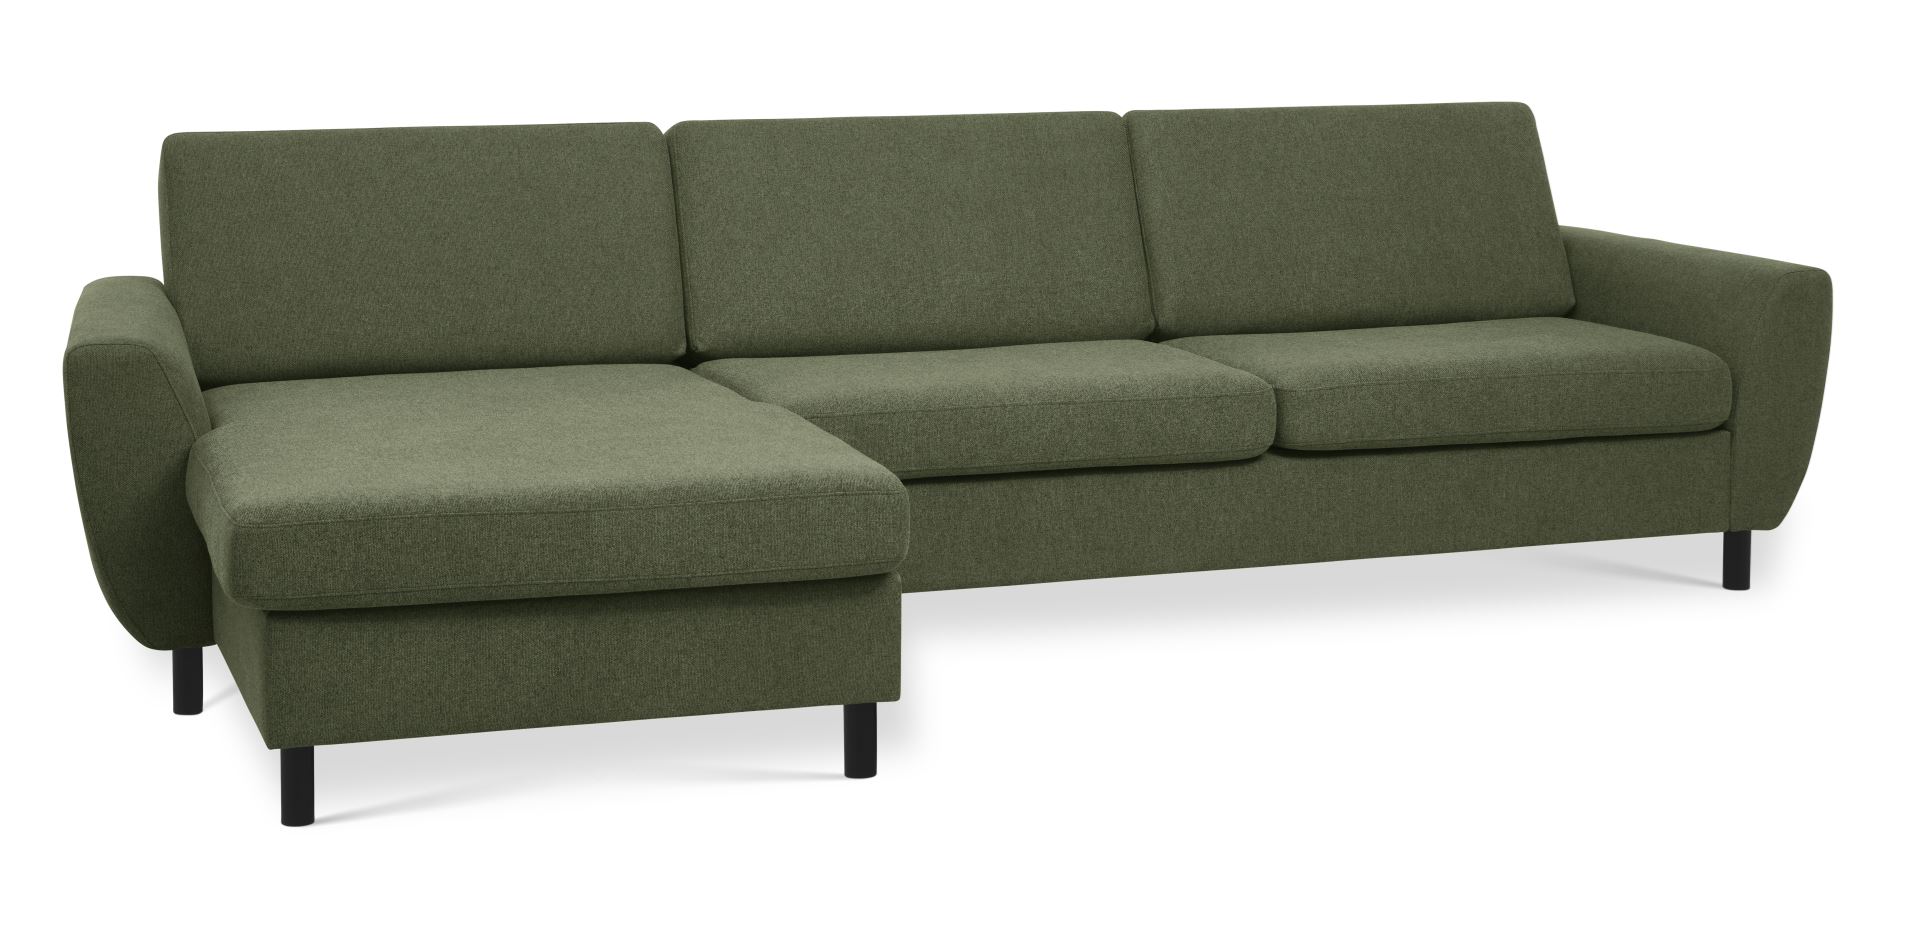 Wendy set 8 3D XL sofa, m. chaiselong - vinter mosgrøn polyester stof og sort træ